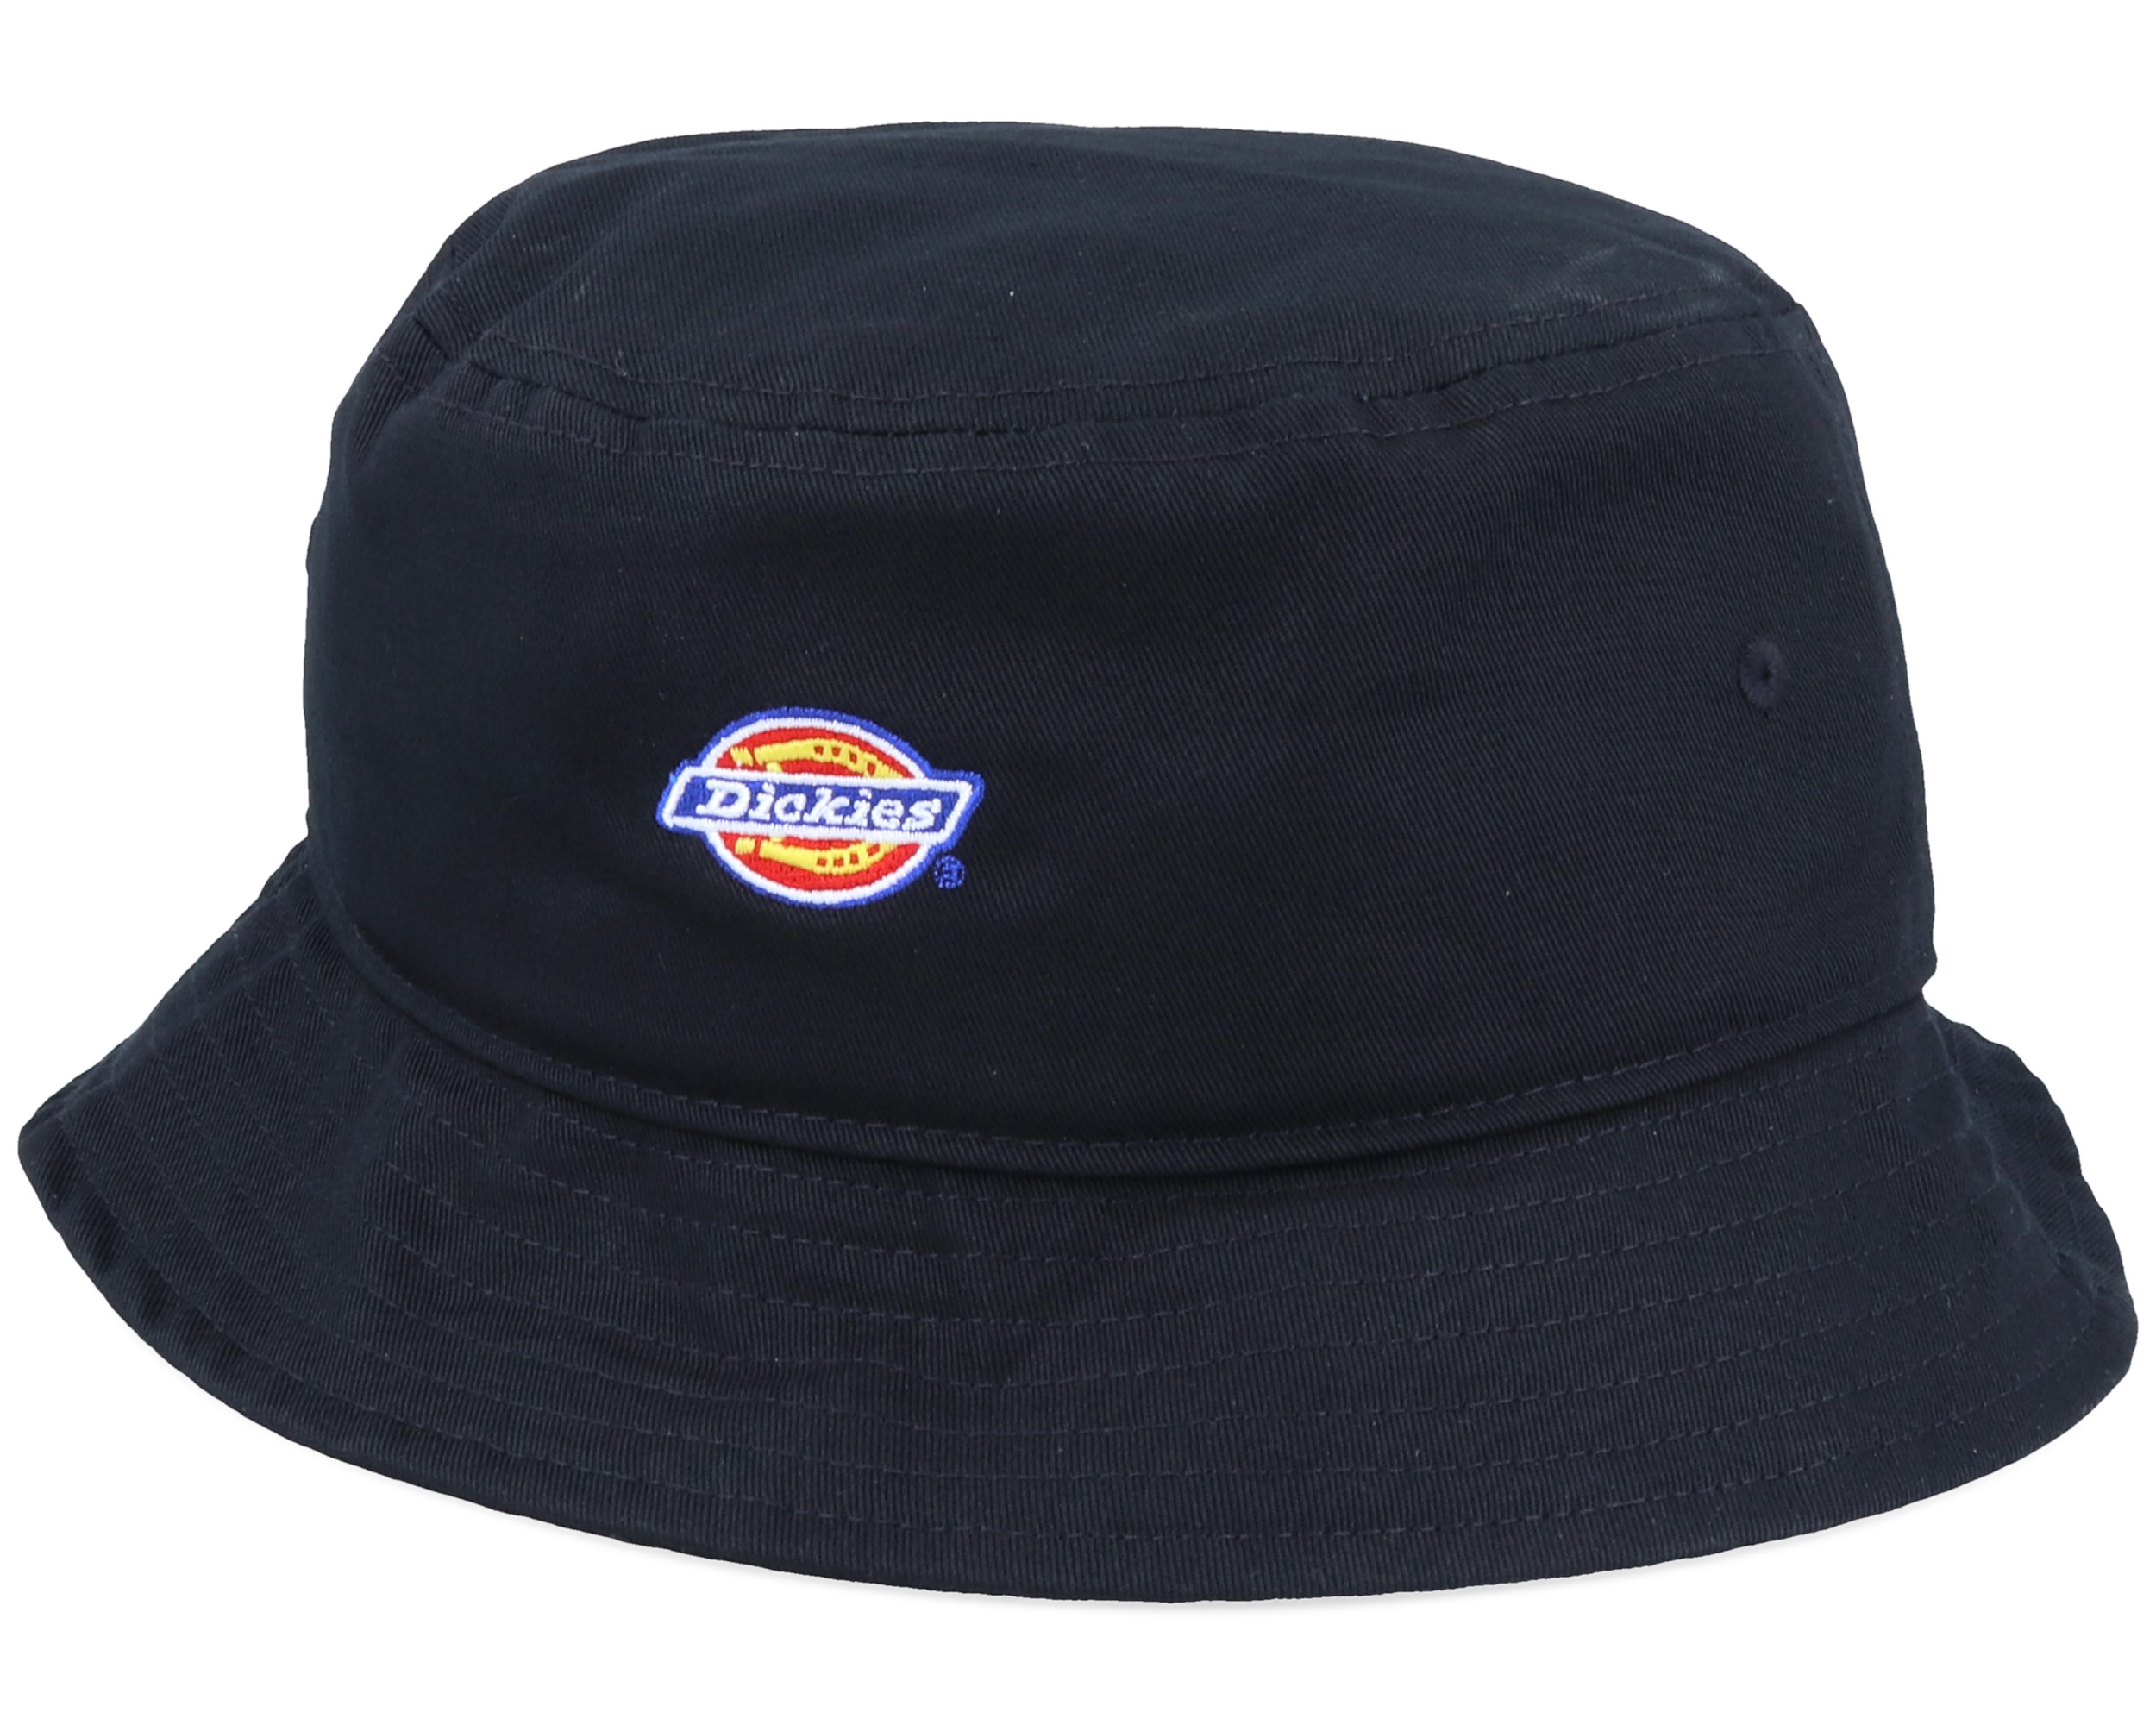 Ray City Black Bucket - Dickies hats - Hatstoreworld.com